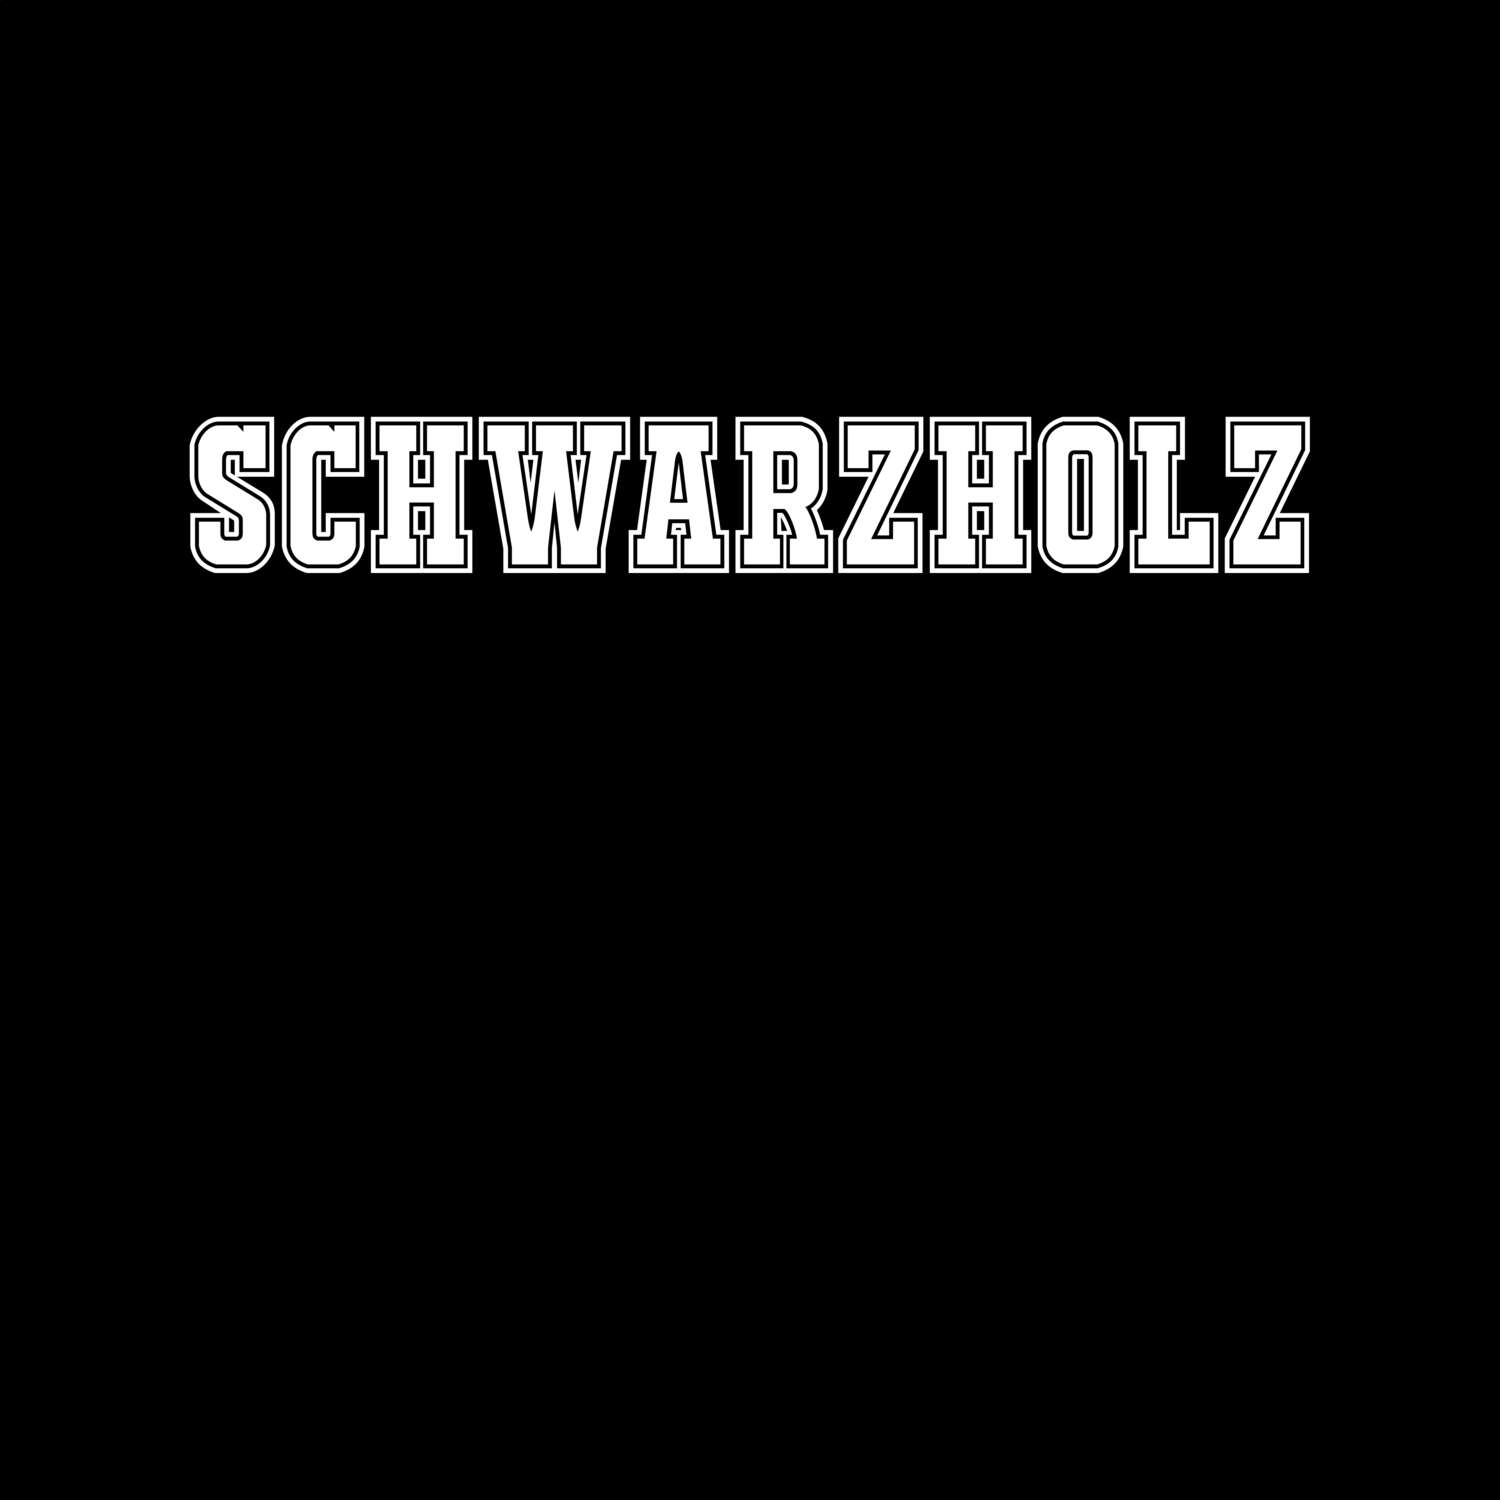 Schwarzholz T-Shirt »Classic«